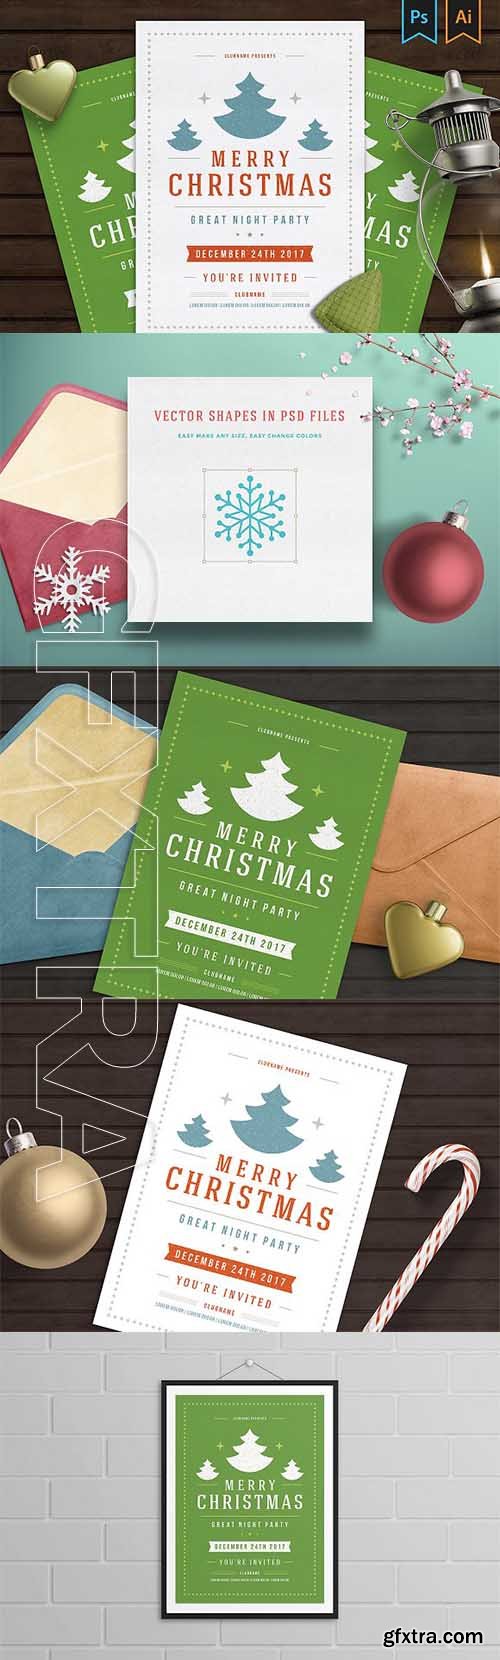 CreativeMarket - Christmas party invitation flyer 1903657